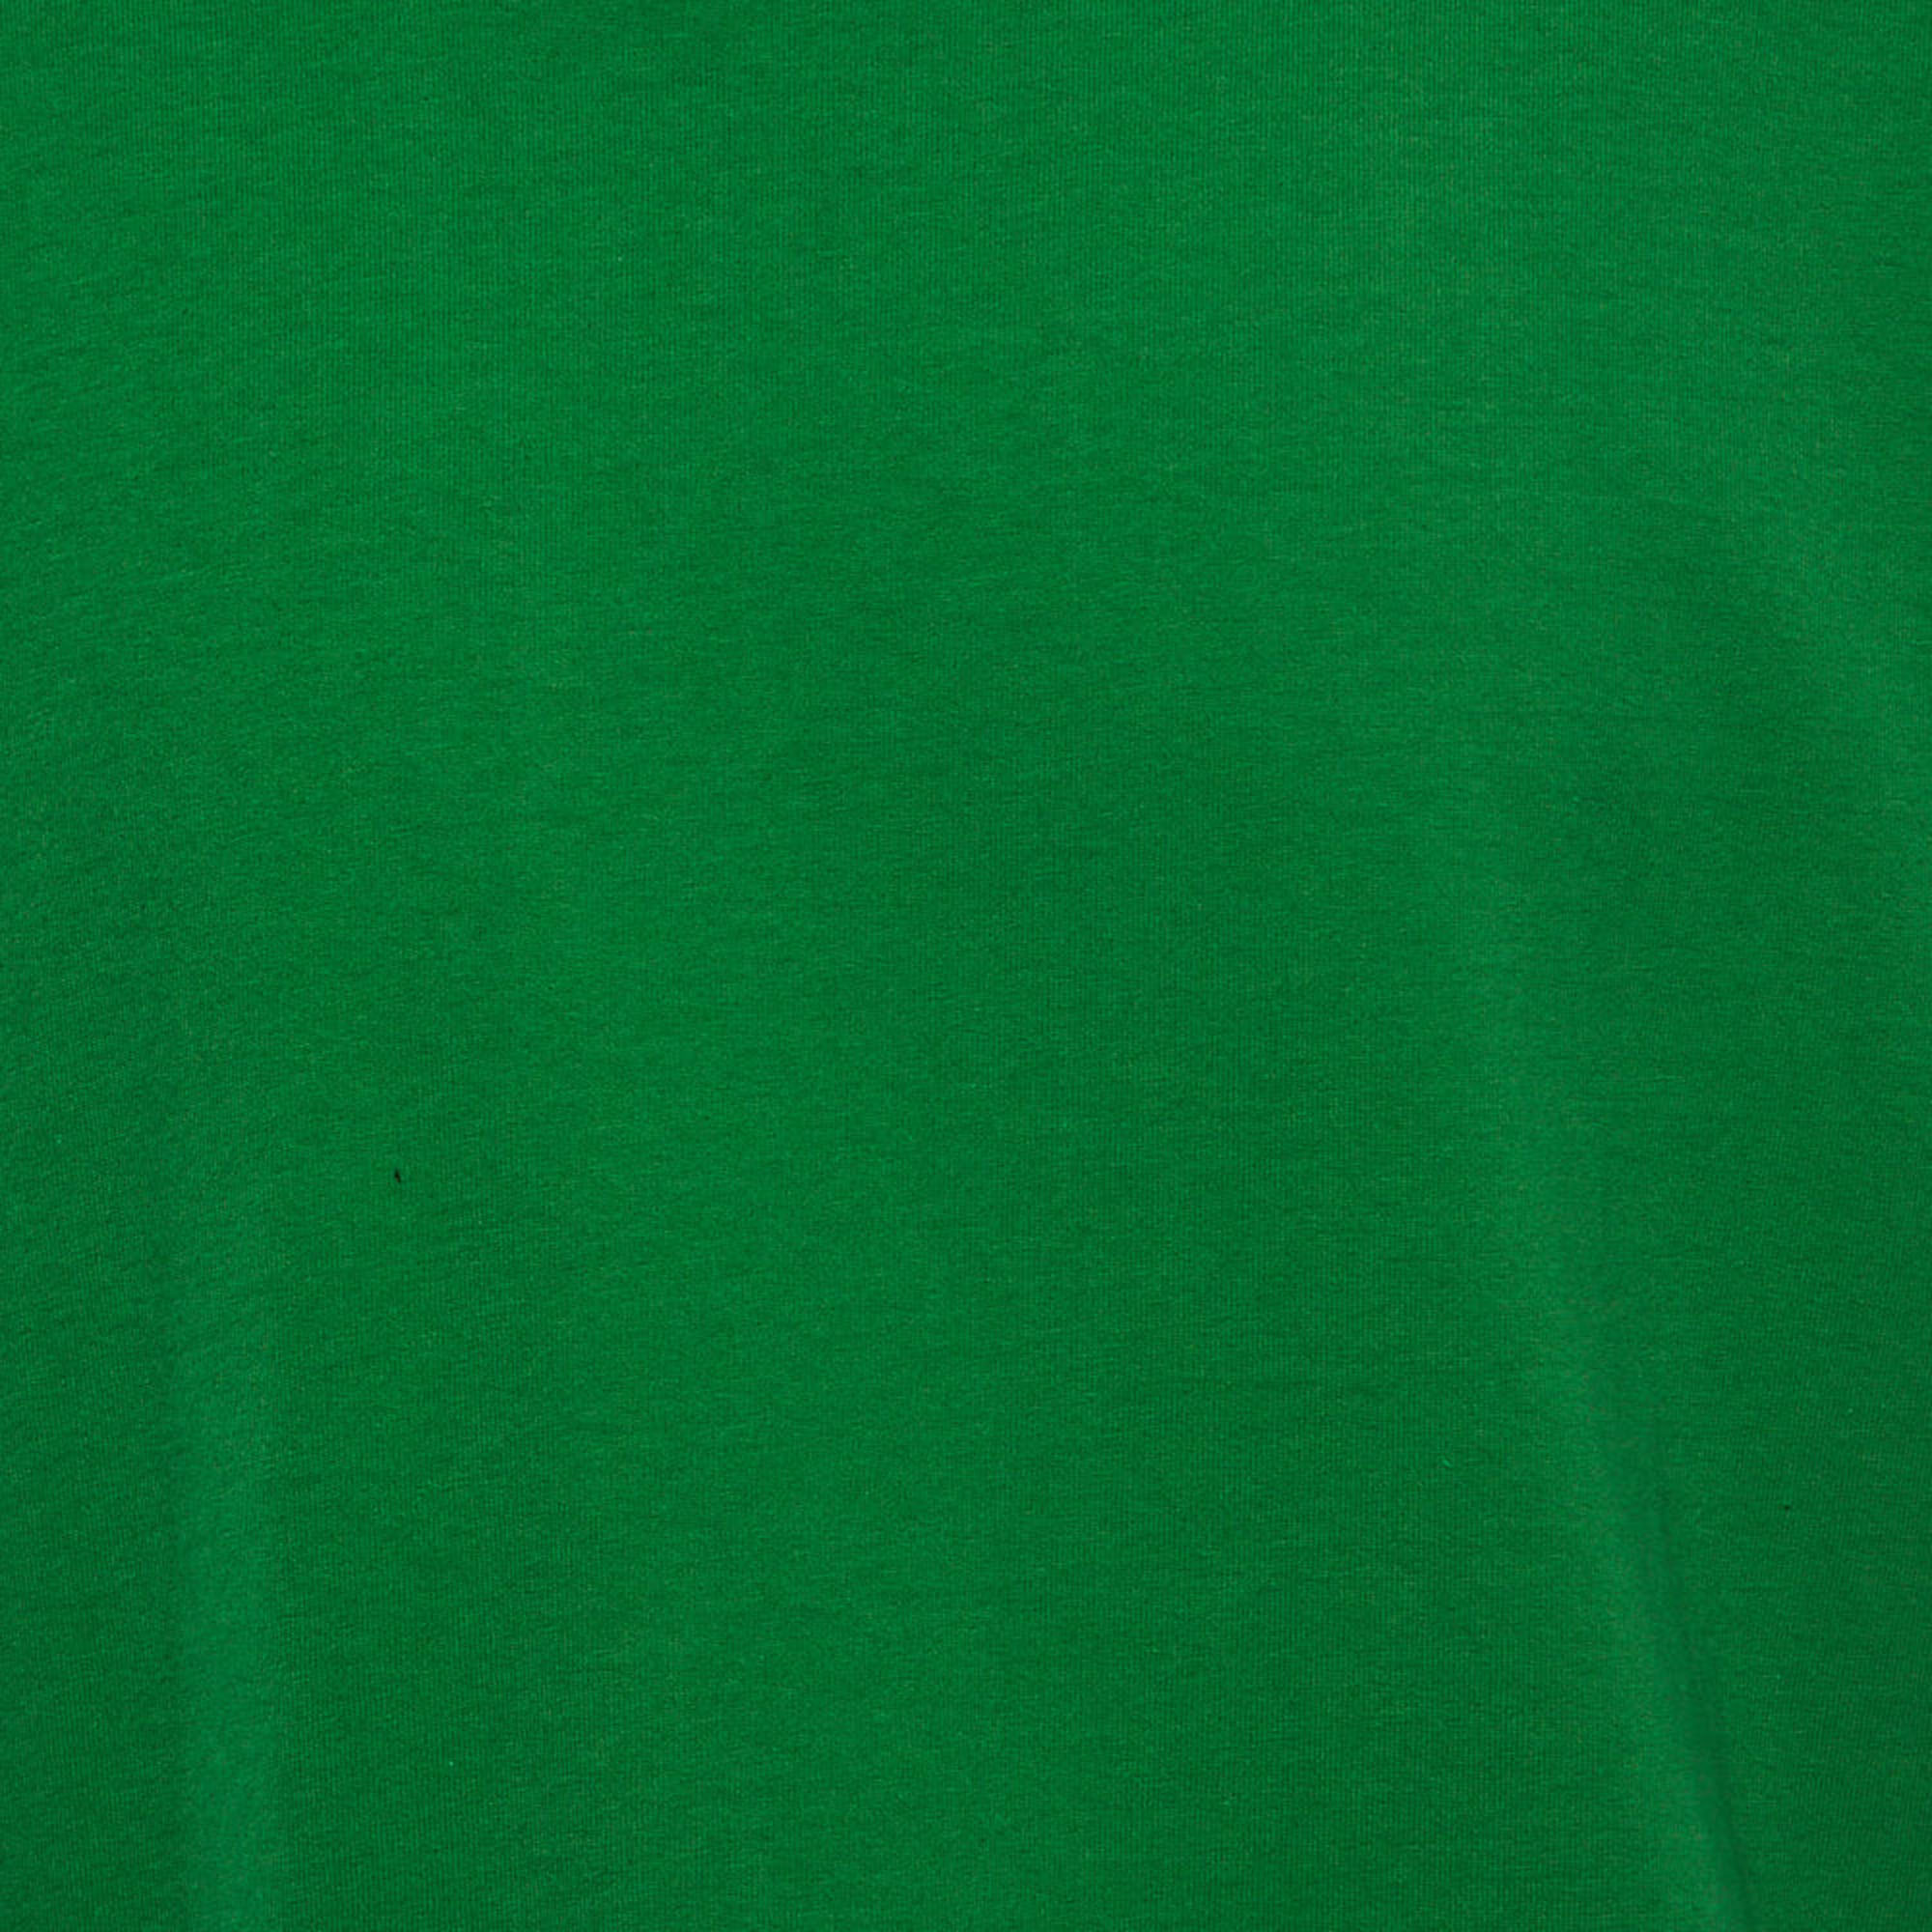 Bottega Veneta Green Cotton Double Layered Round Neck T-Shirt M